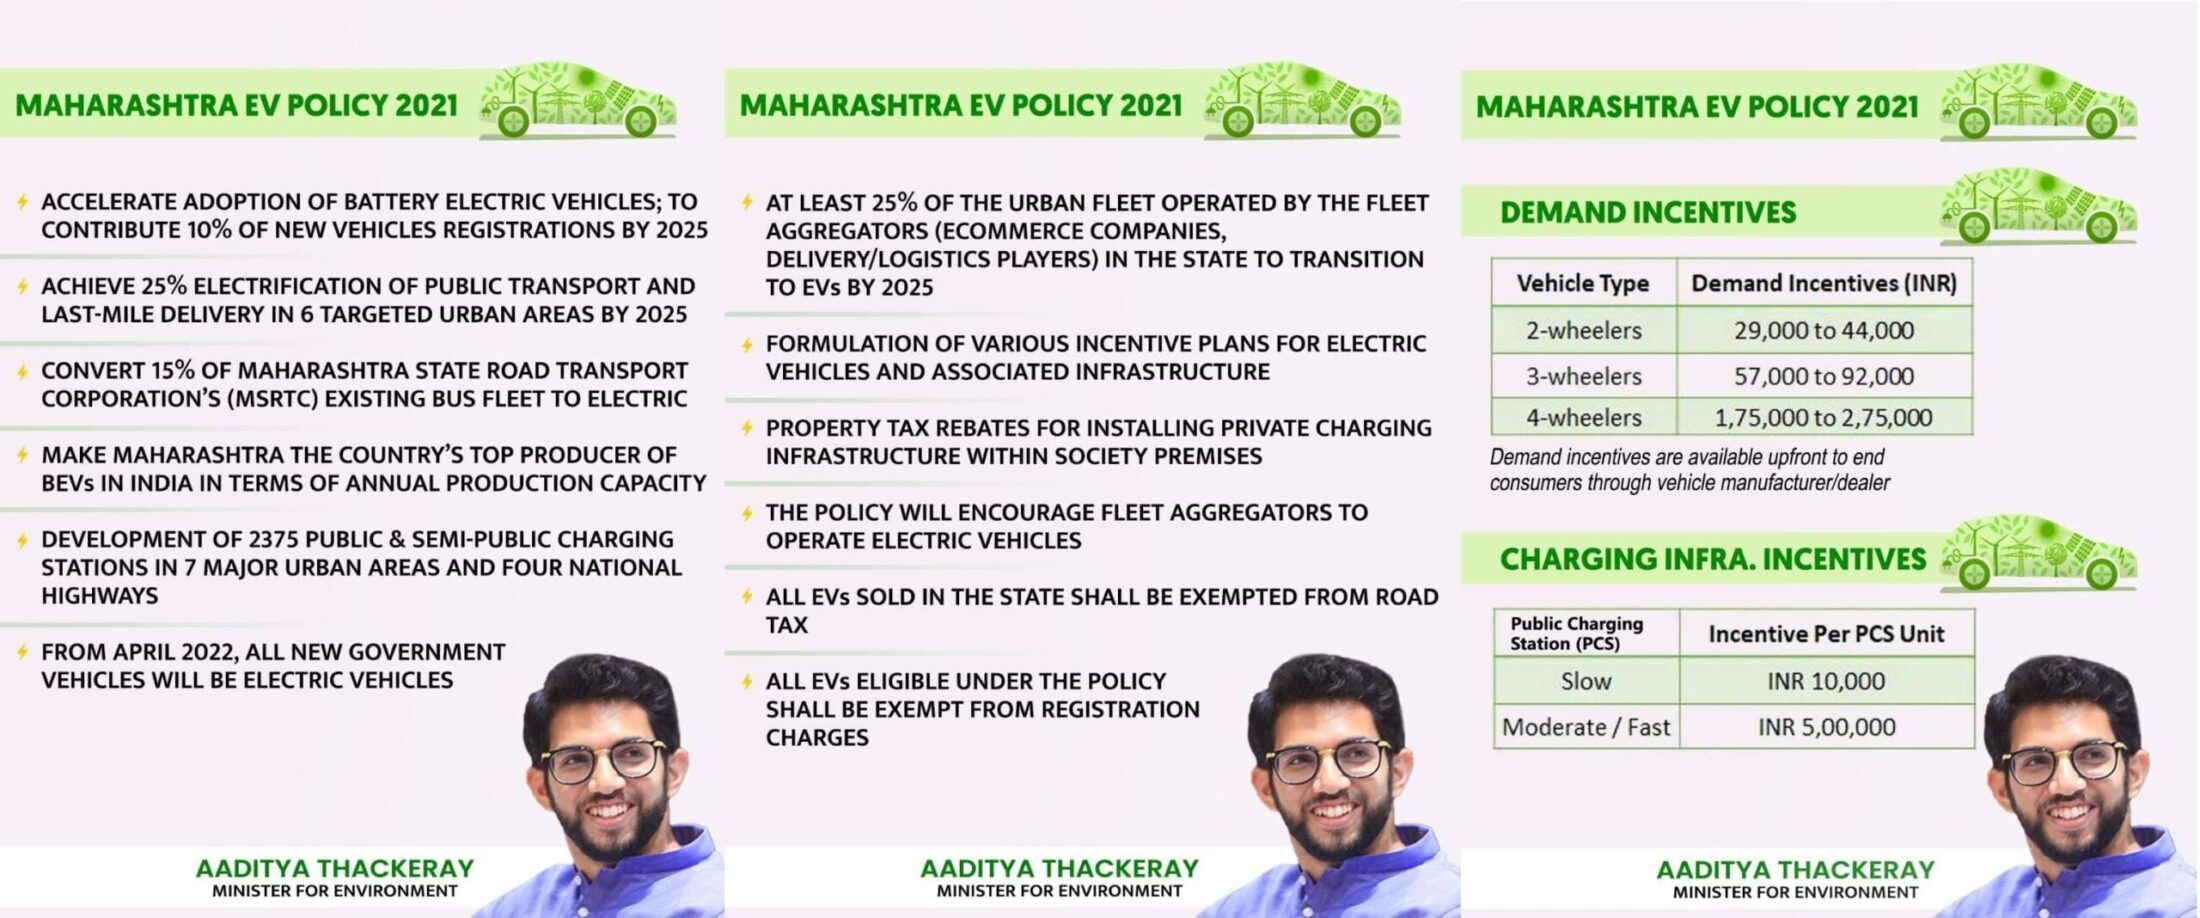 https://e-vehicleinfo.com/maharashtra-electric-vehicle-ev-policy-2021-highlights/